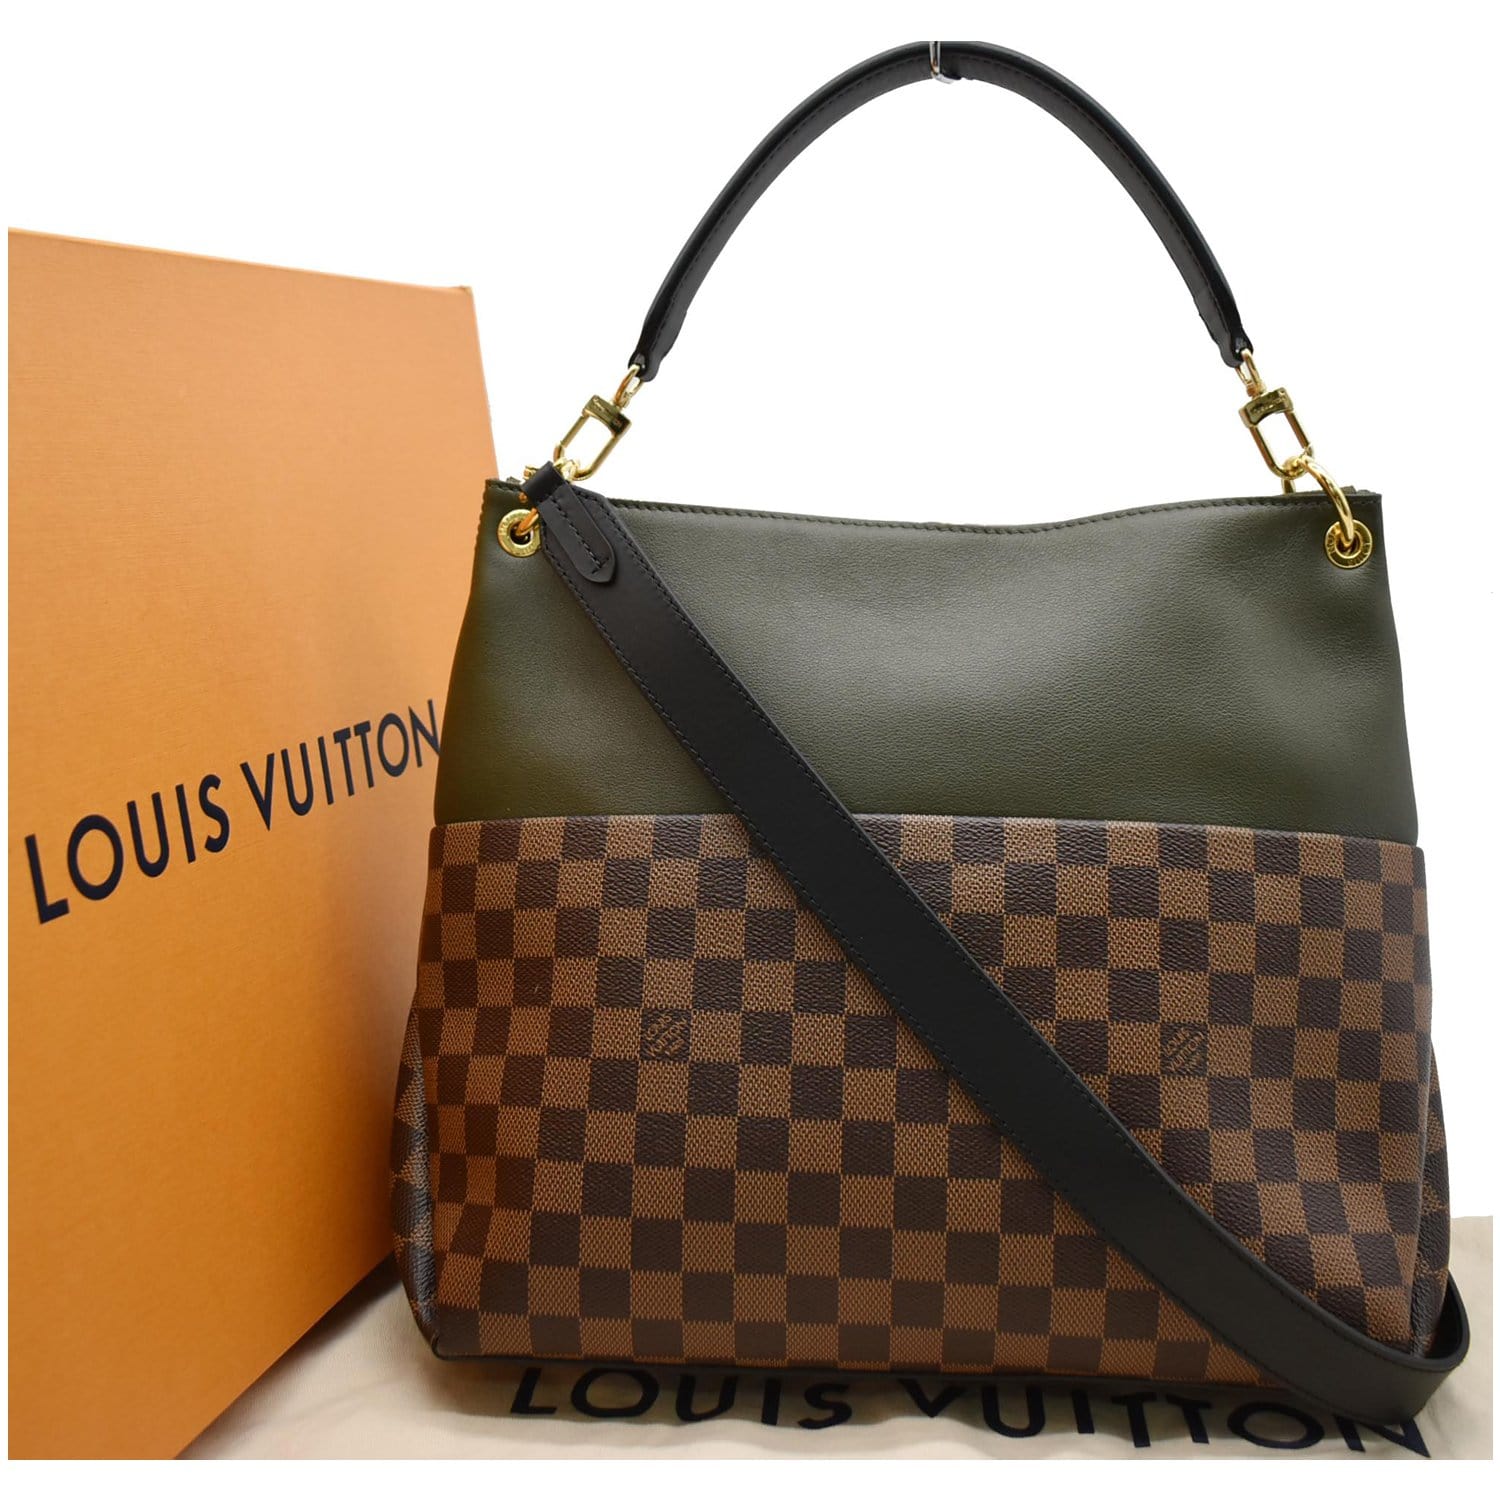 Louis Vuitton Maida Hobo, TWO YEAR REVIEW